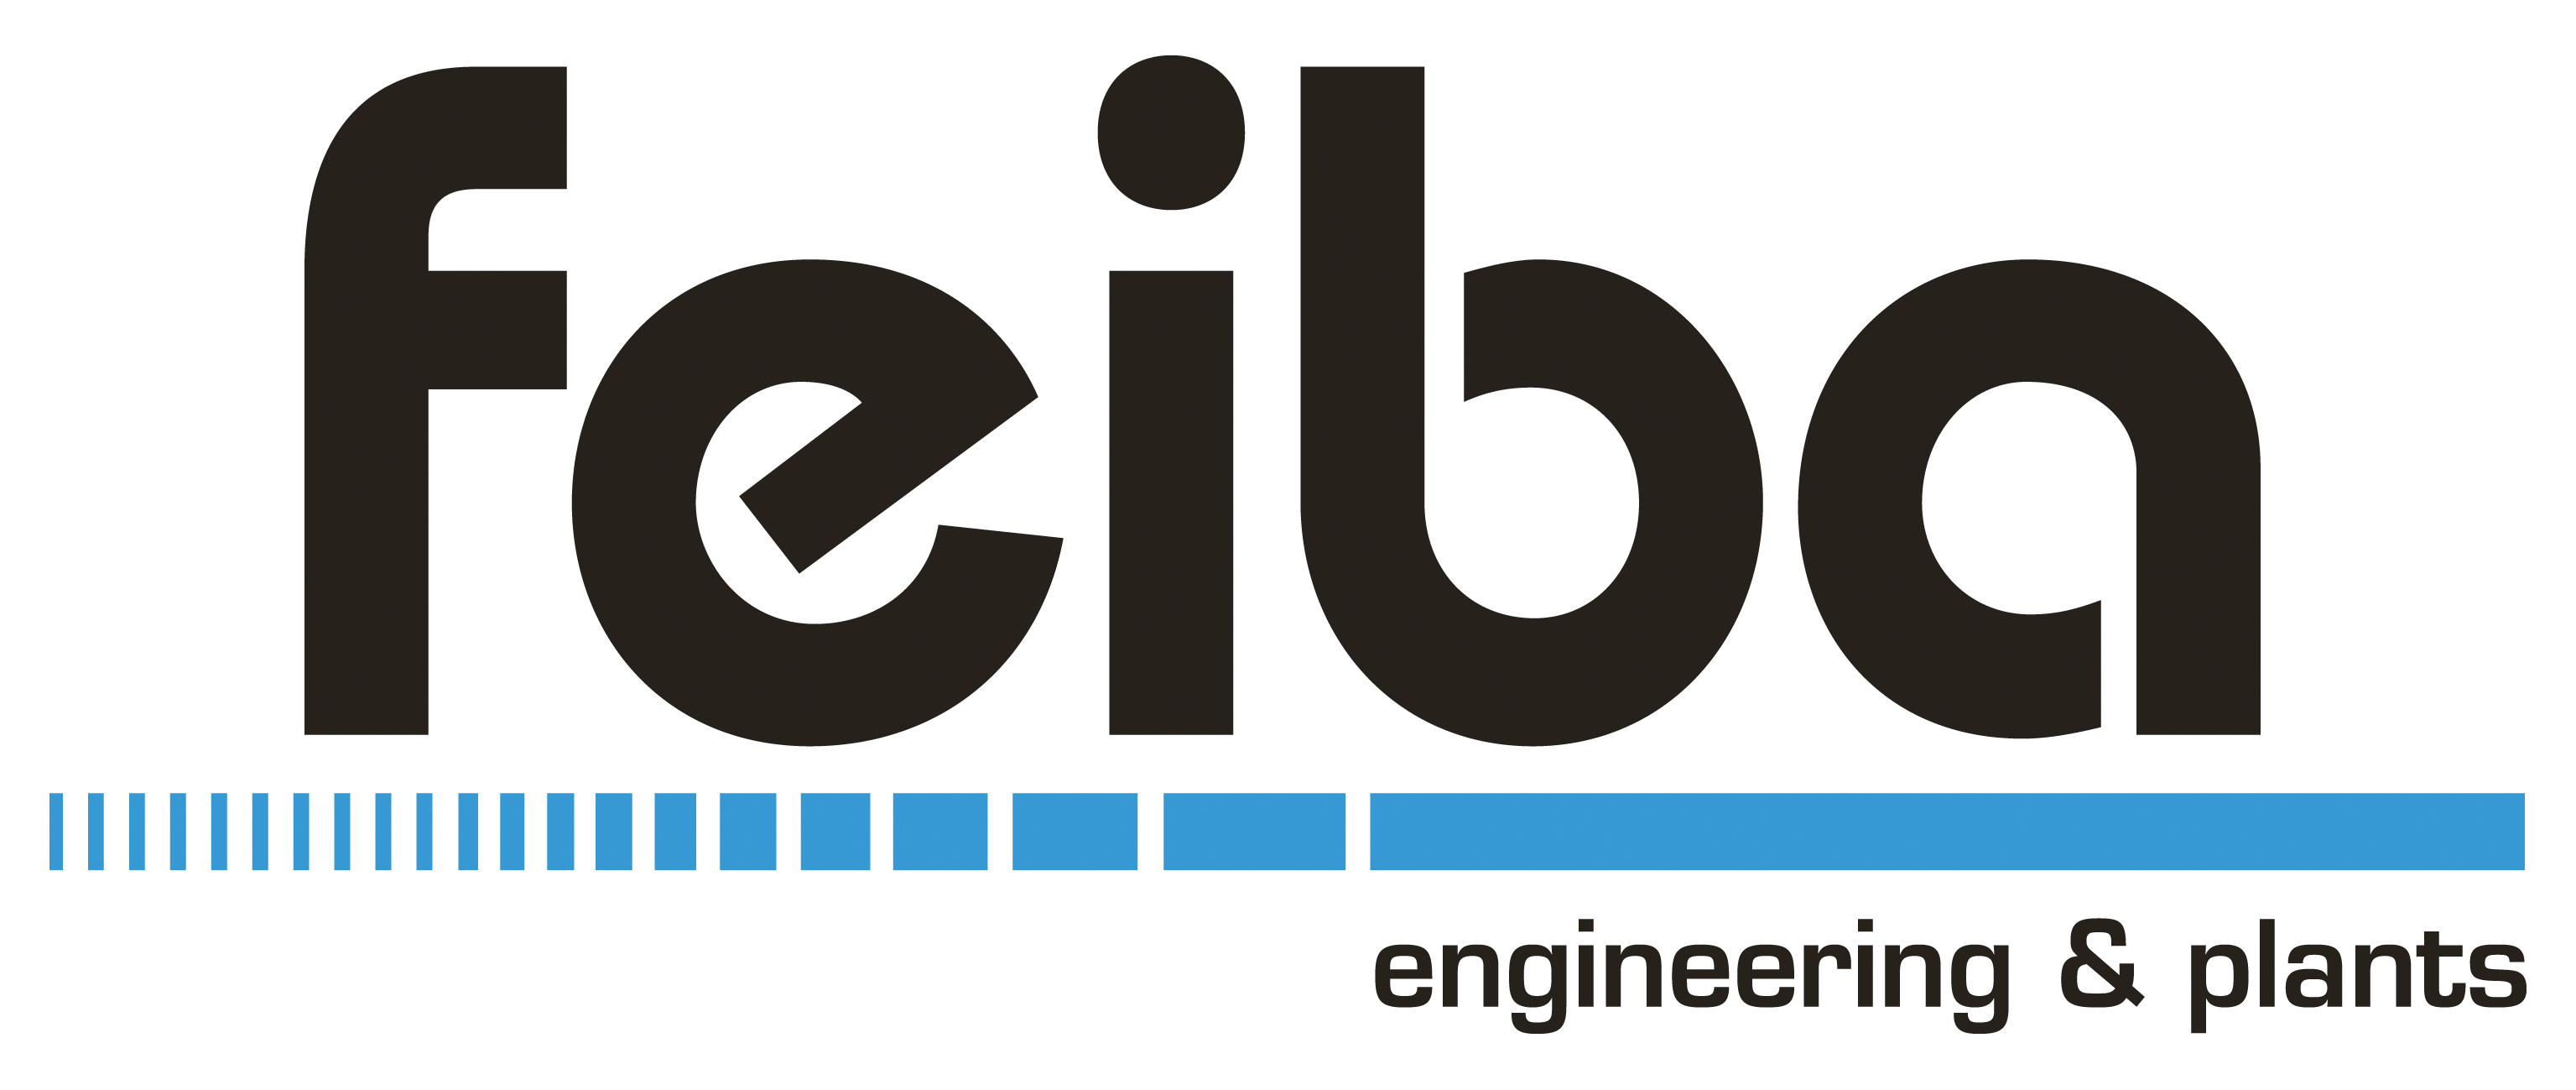 Feiba Engineering & Plants GmbH